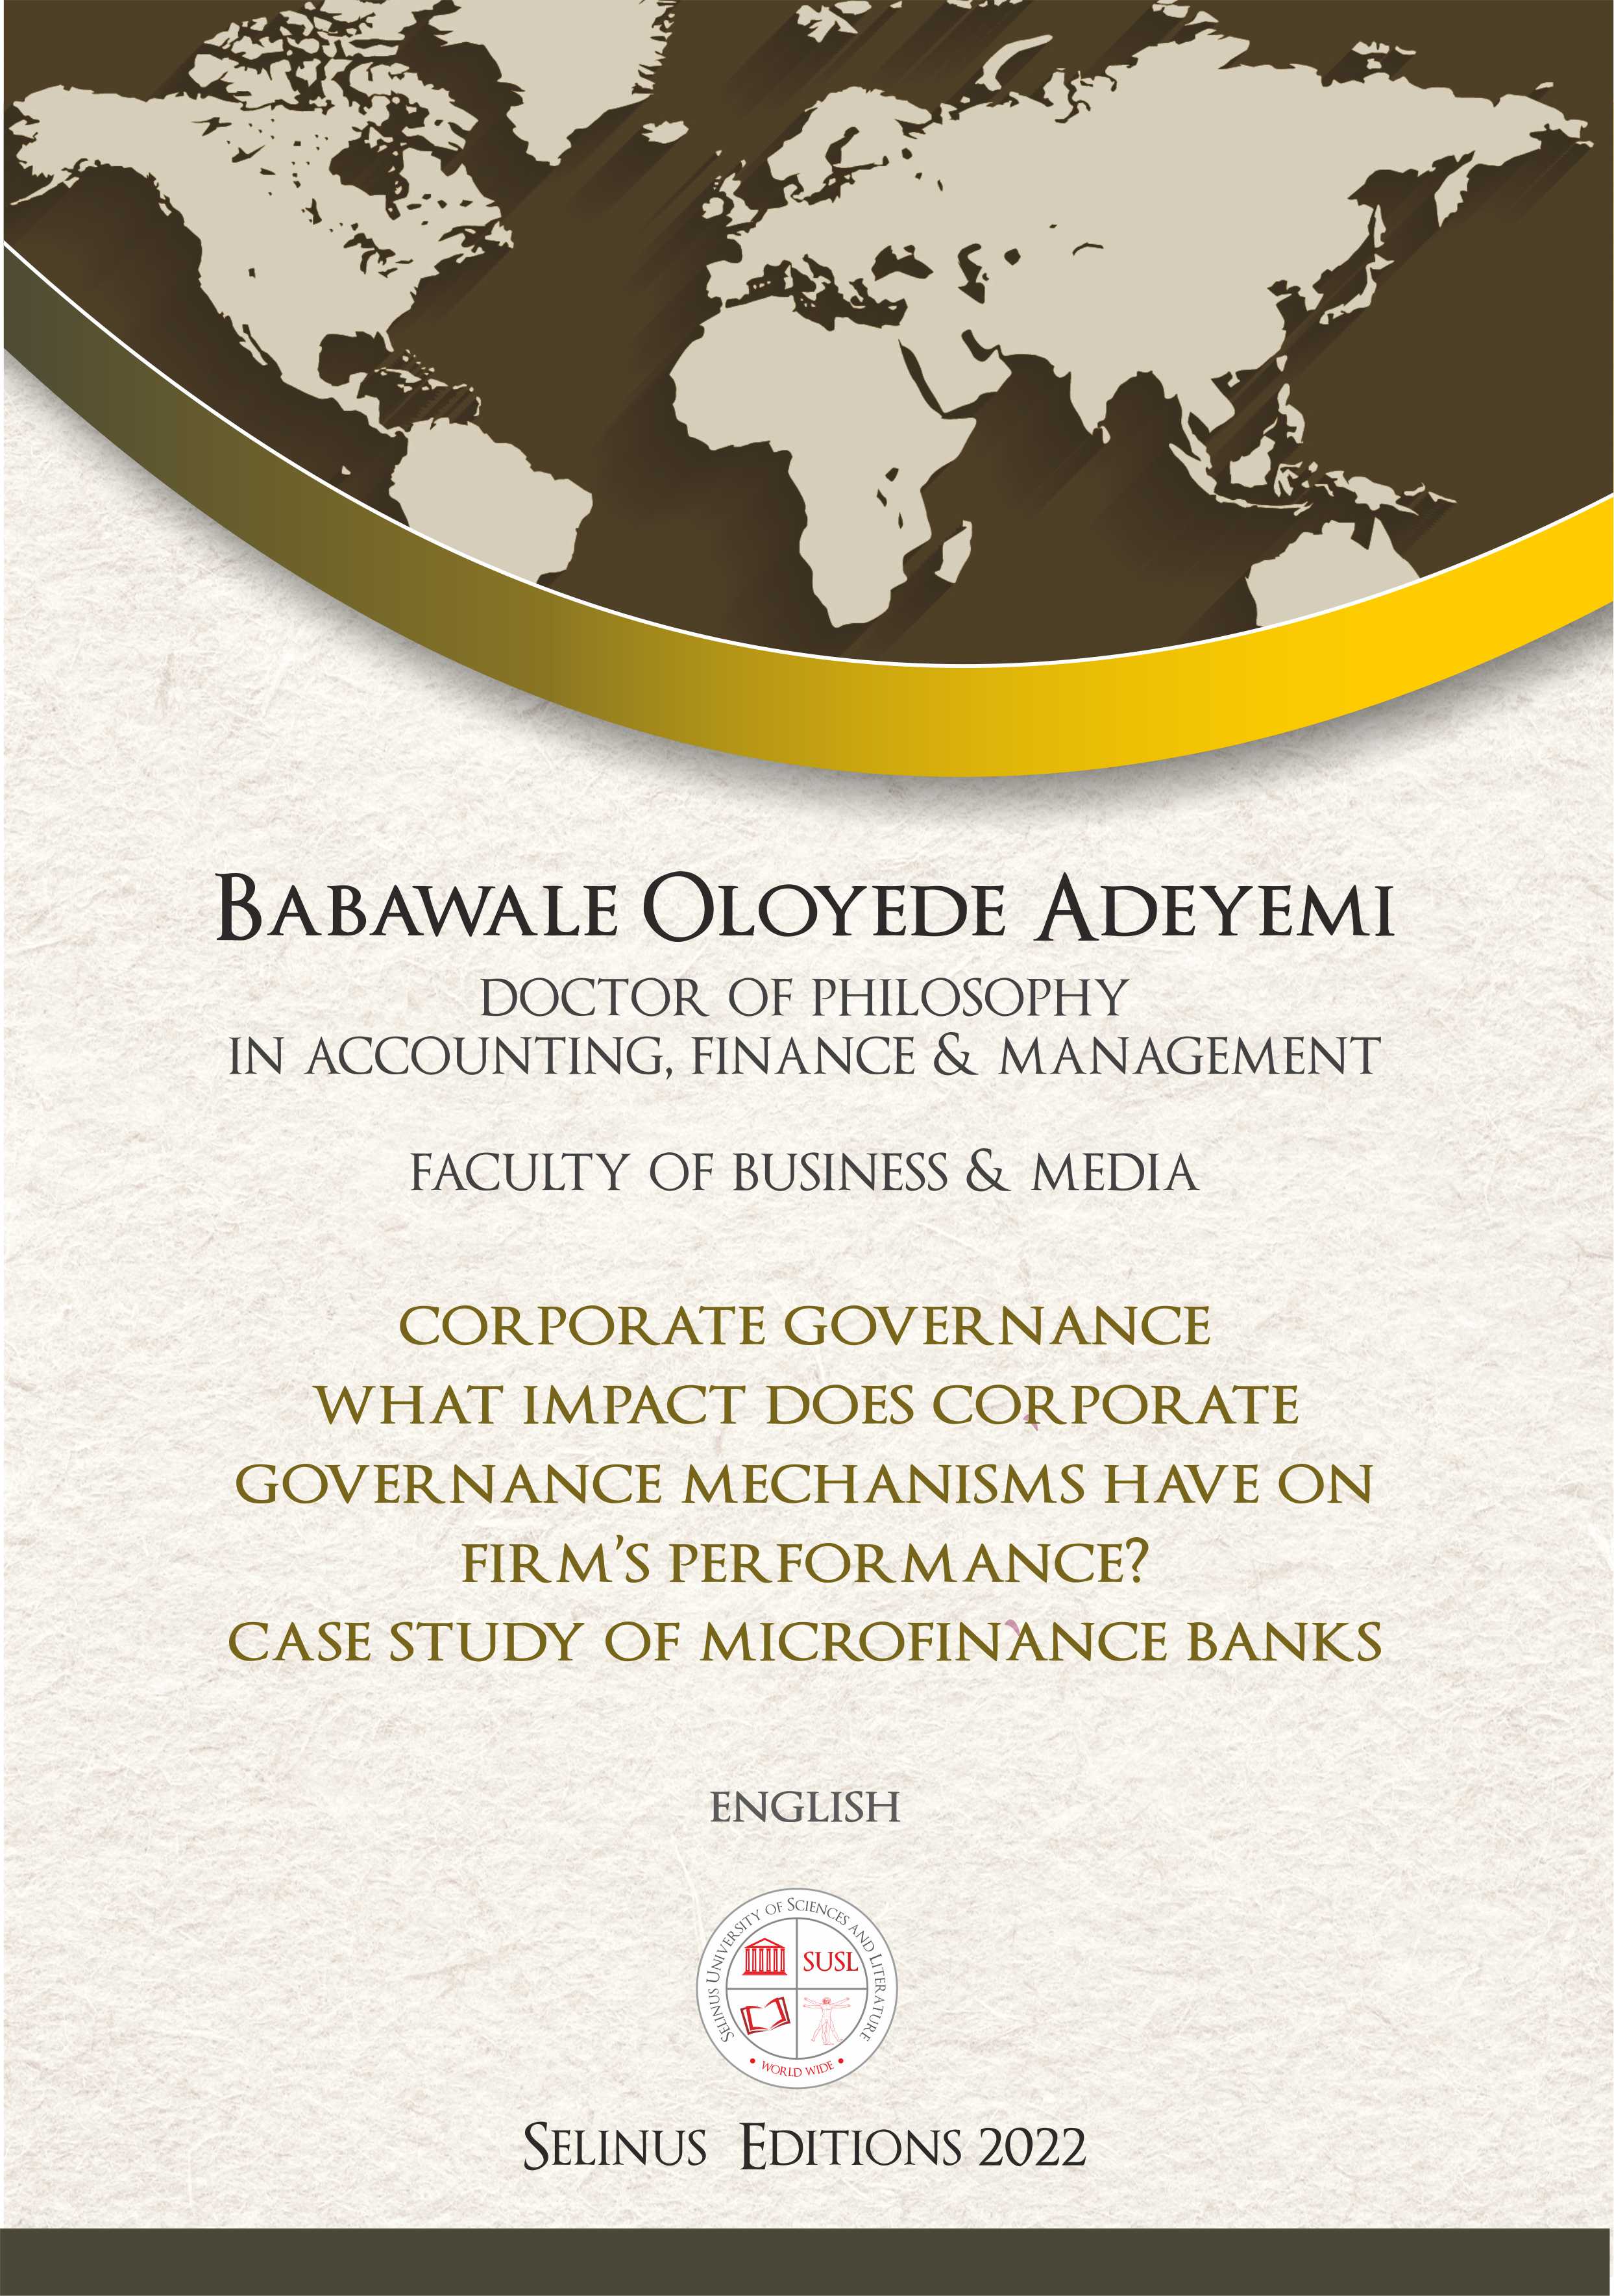 Thesis Babawale Oloyede Adeyemi